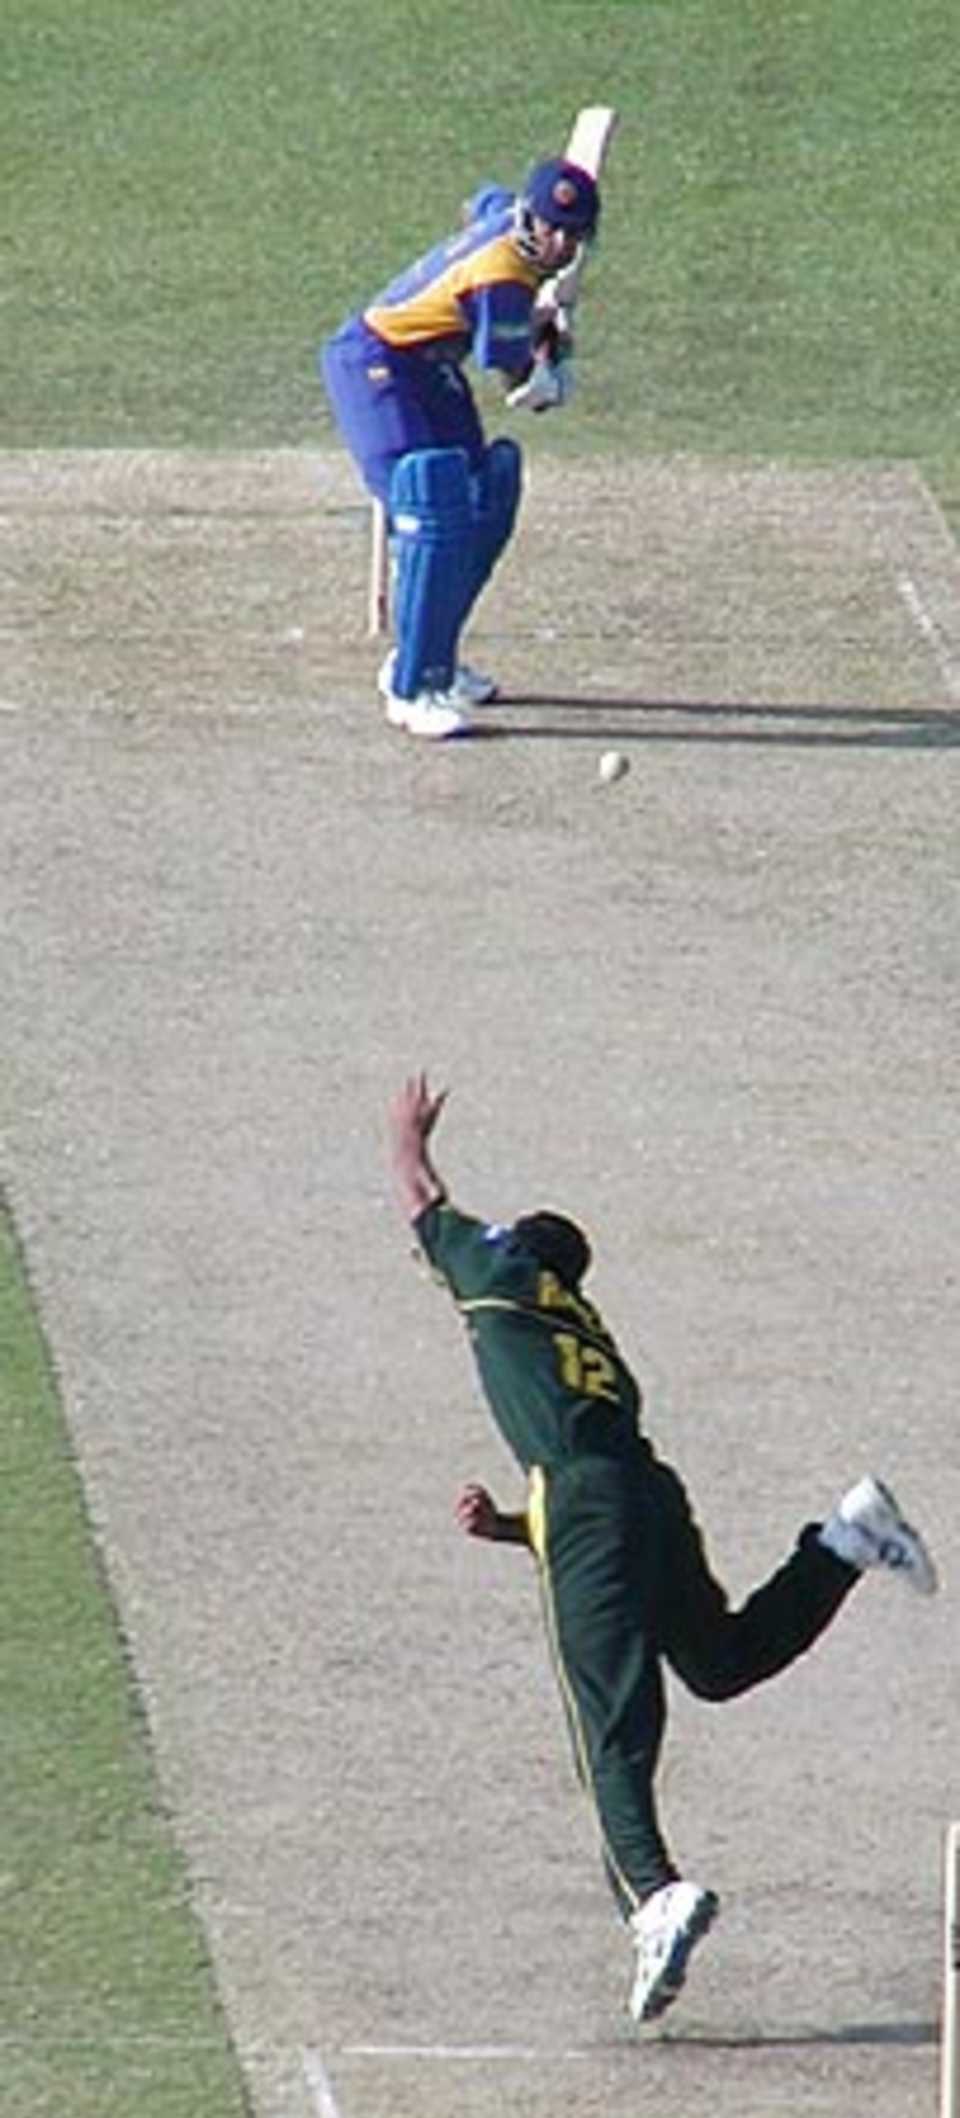 Razzaq bowling to Vaas, Morocco Cup, 2nd ODI at Tangier, Pakistan v Sri Lanka, 14 Aug 2002